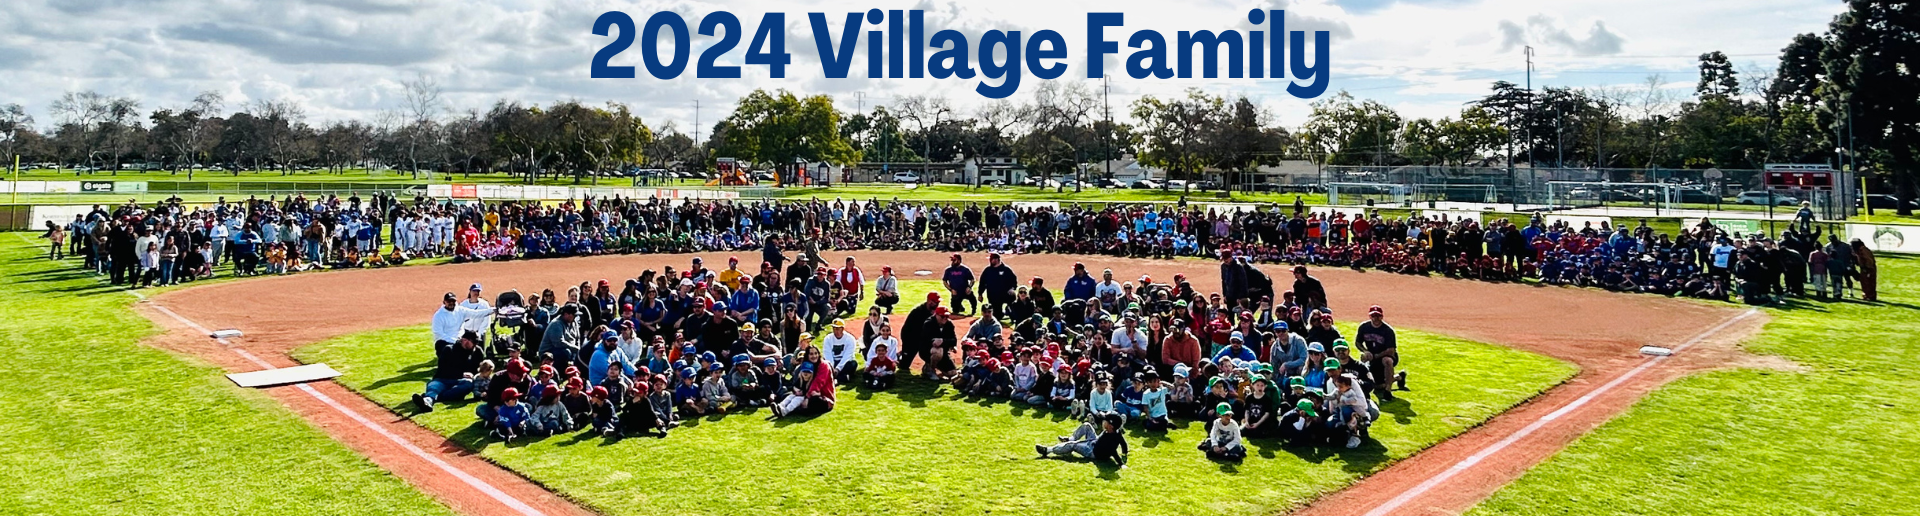 2024 Village Family